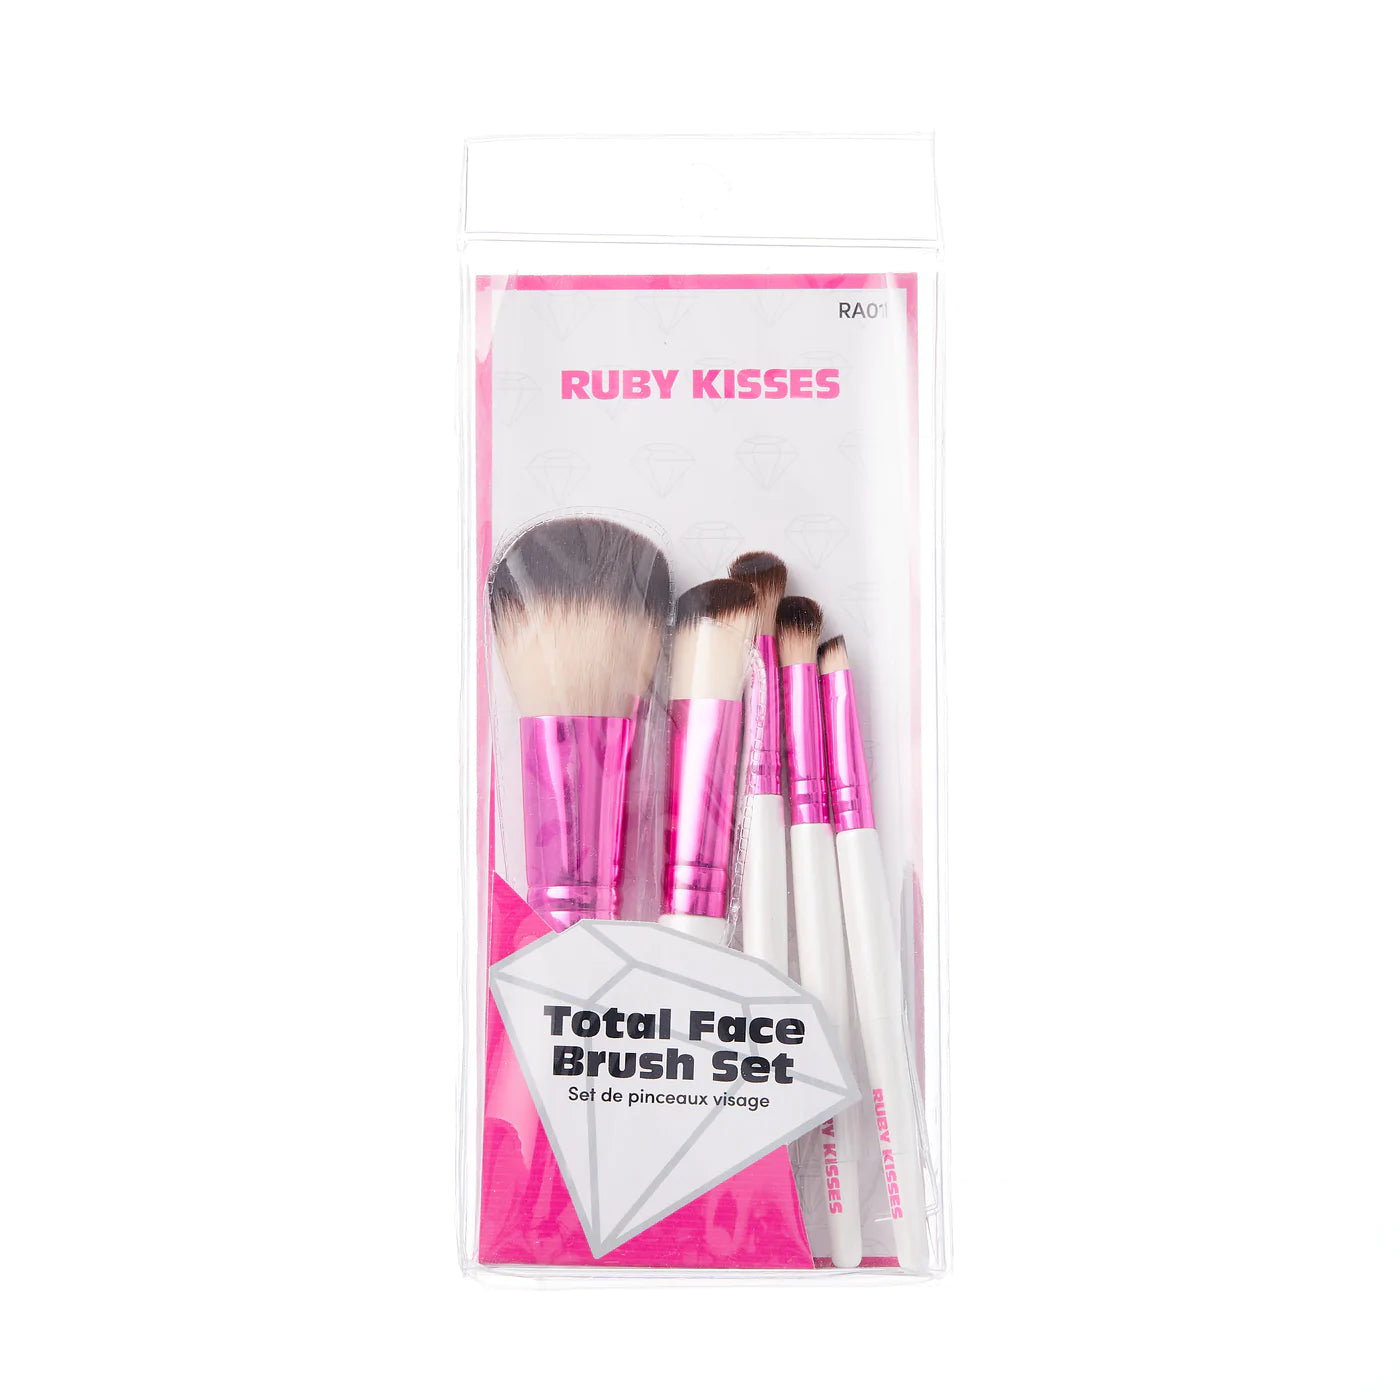 RK Makeup Brush Kit - Total Face (RA01)